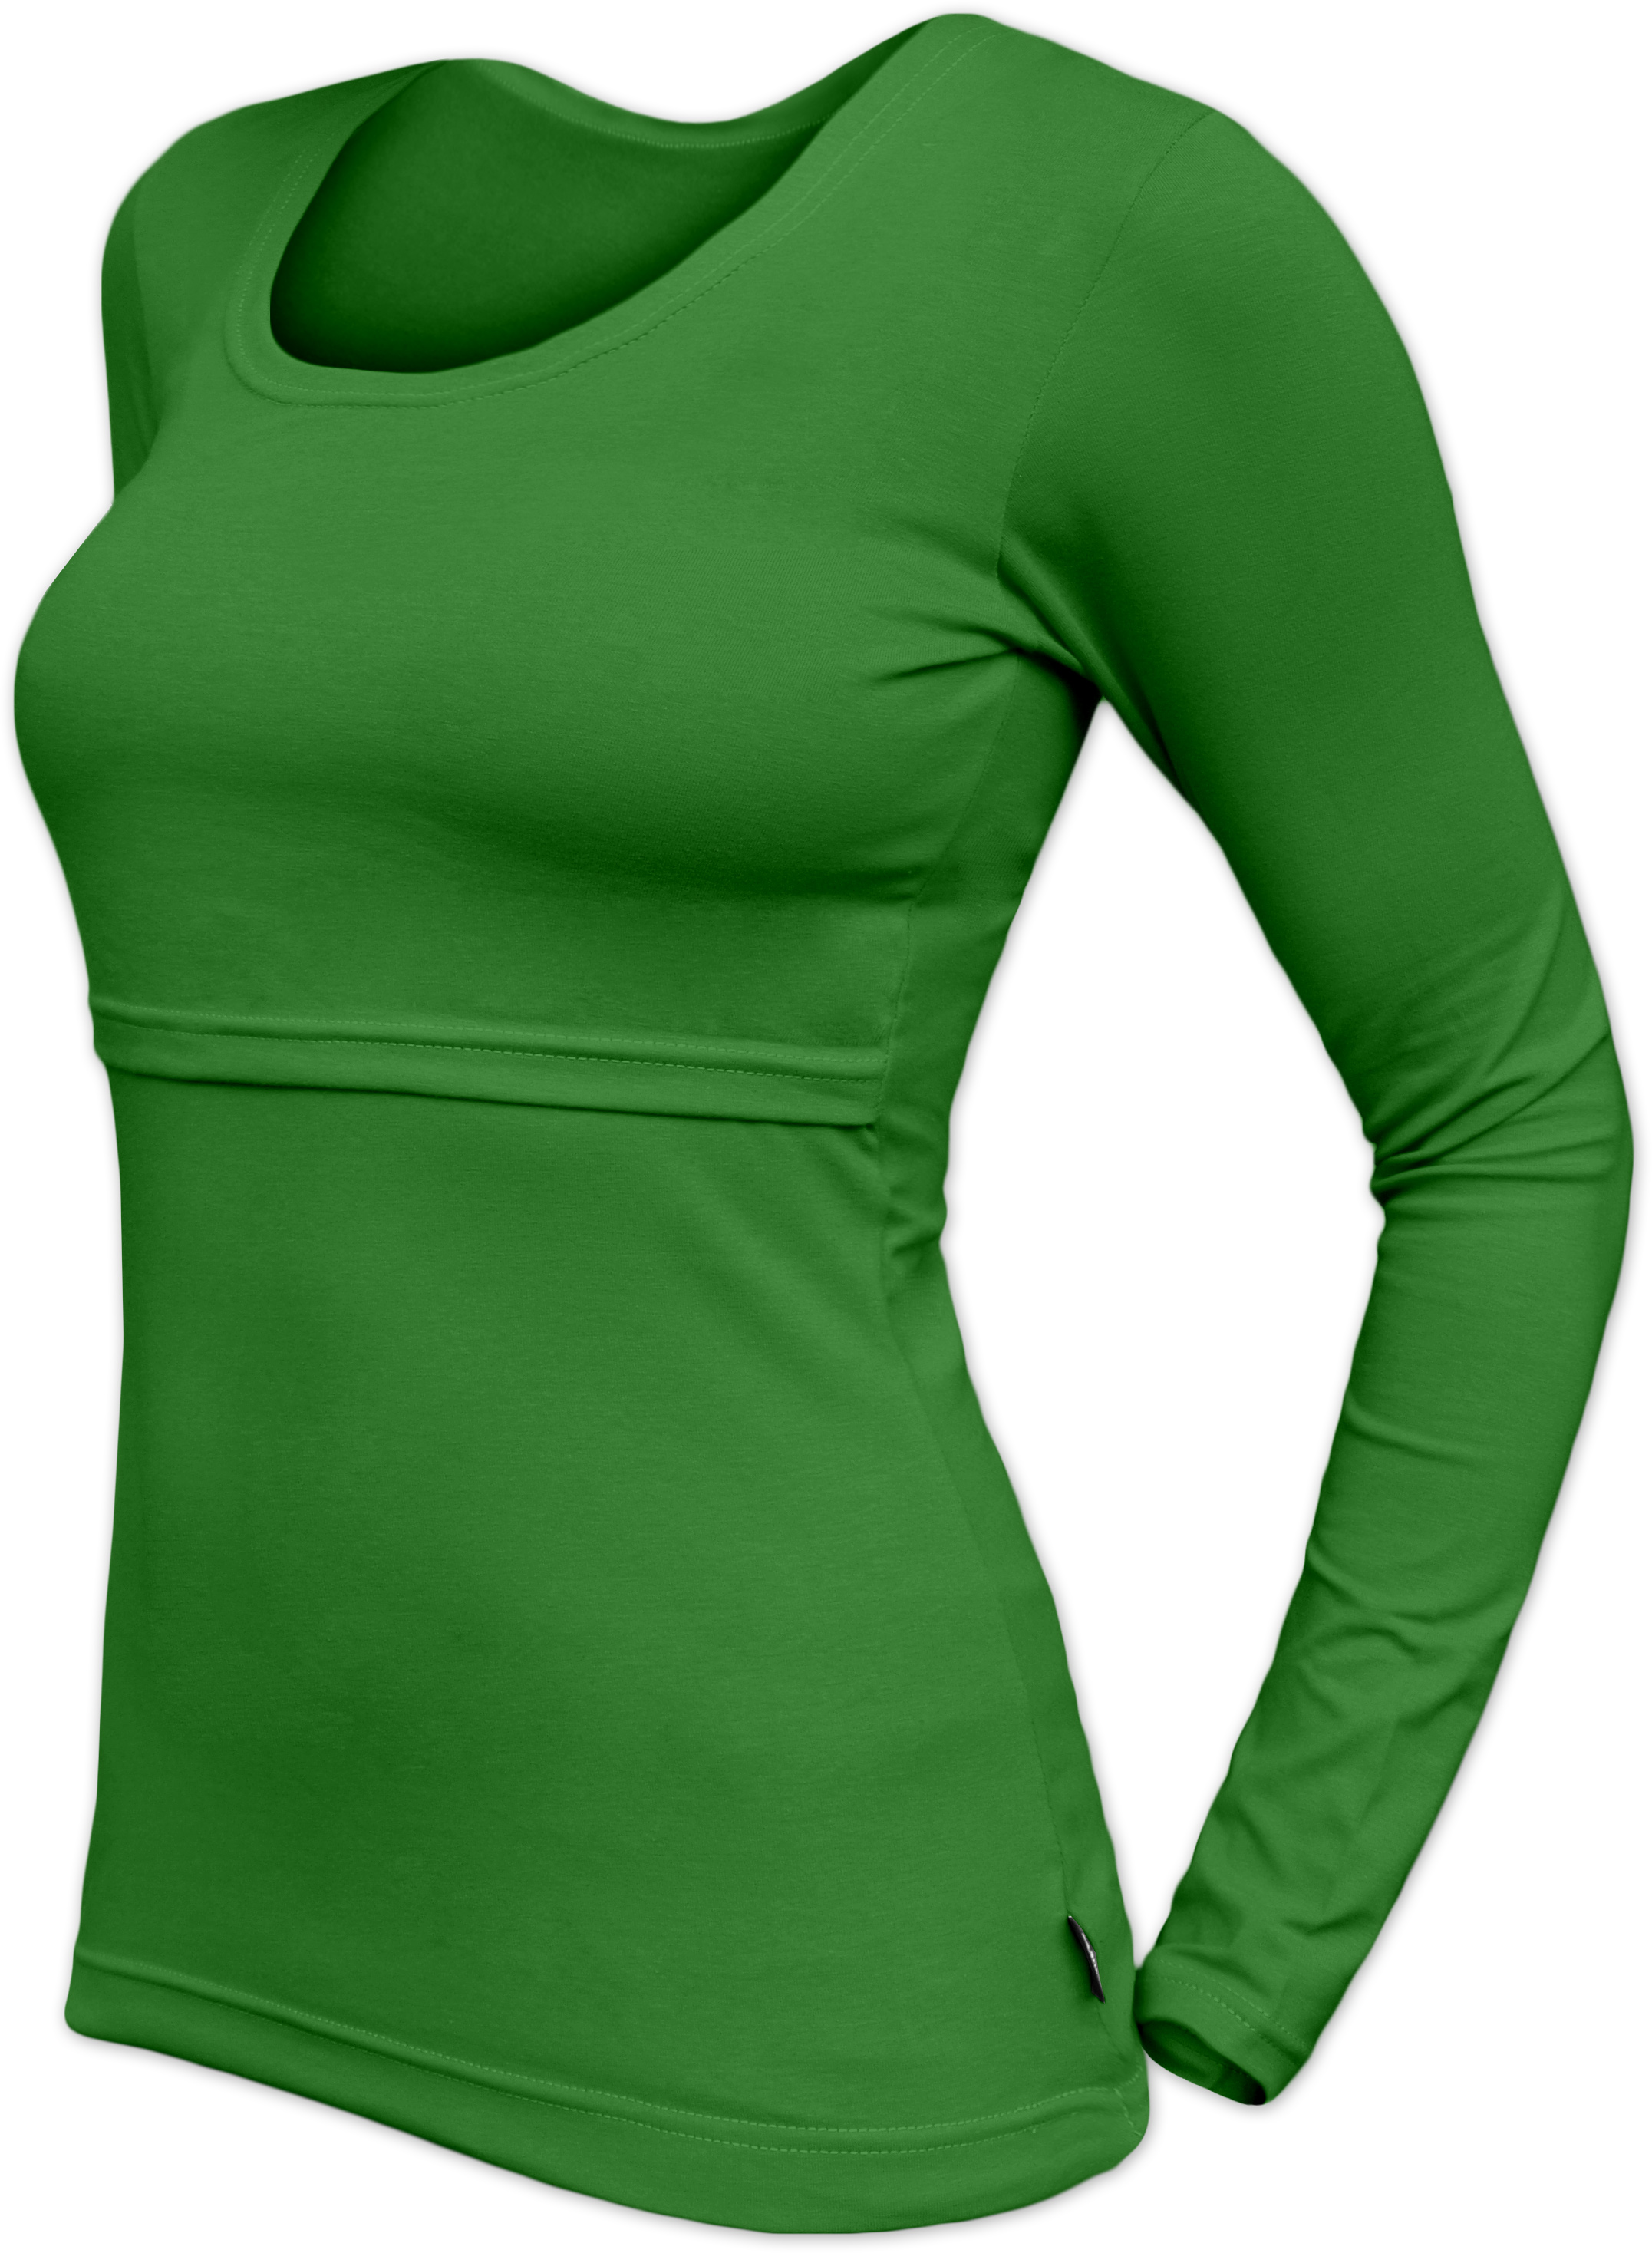 KATERINA- Stillshirt, lange Ärmel, dunkelgrün, S/M